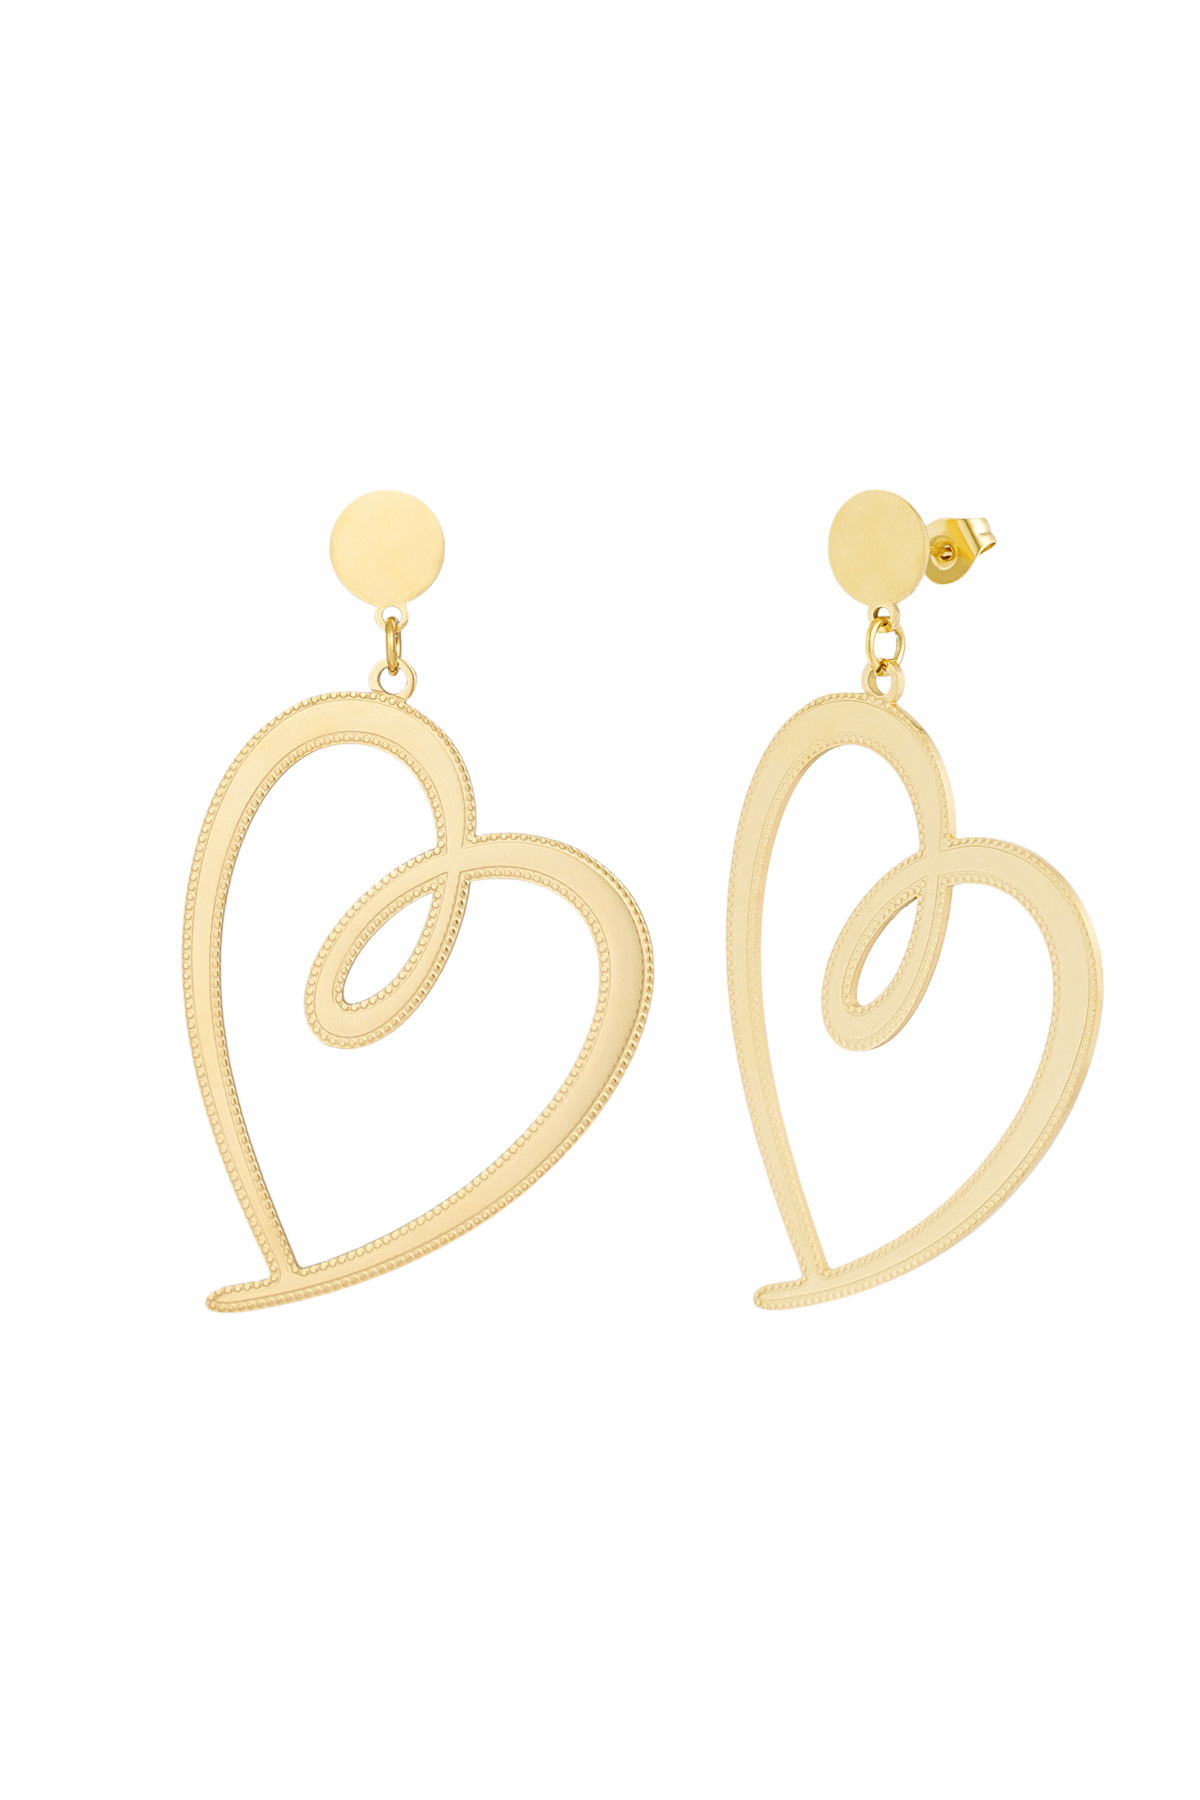 Signed heart earrings - gold 